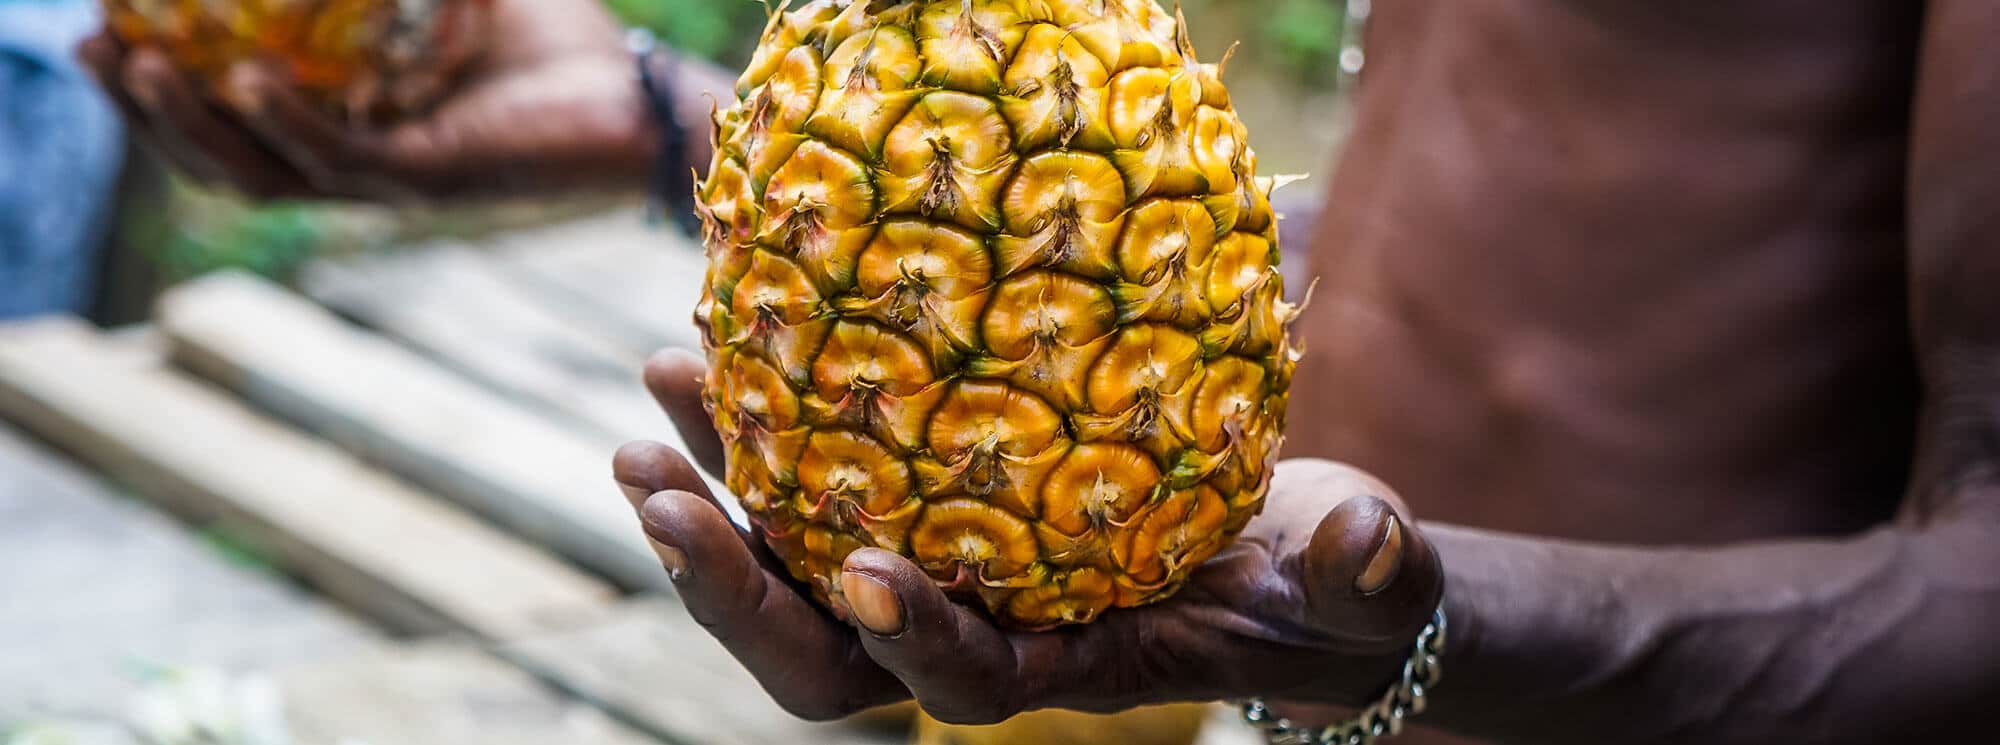 Jamaican pineapple, Jamaica destinations